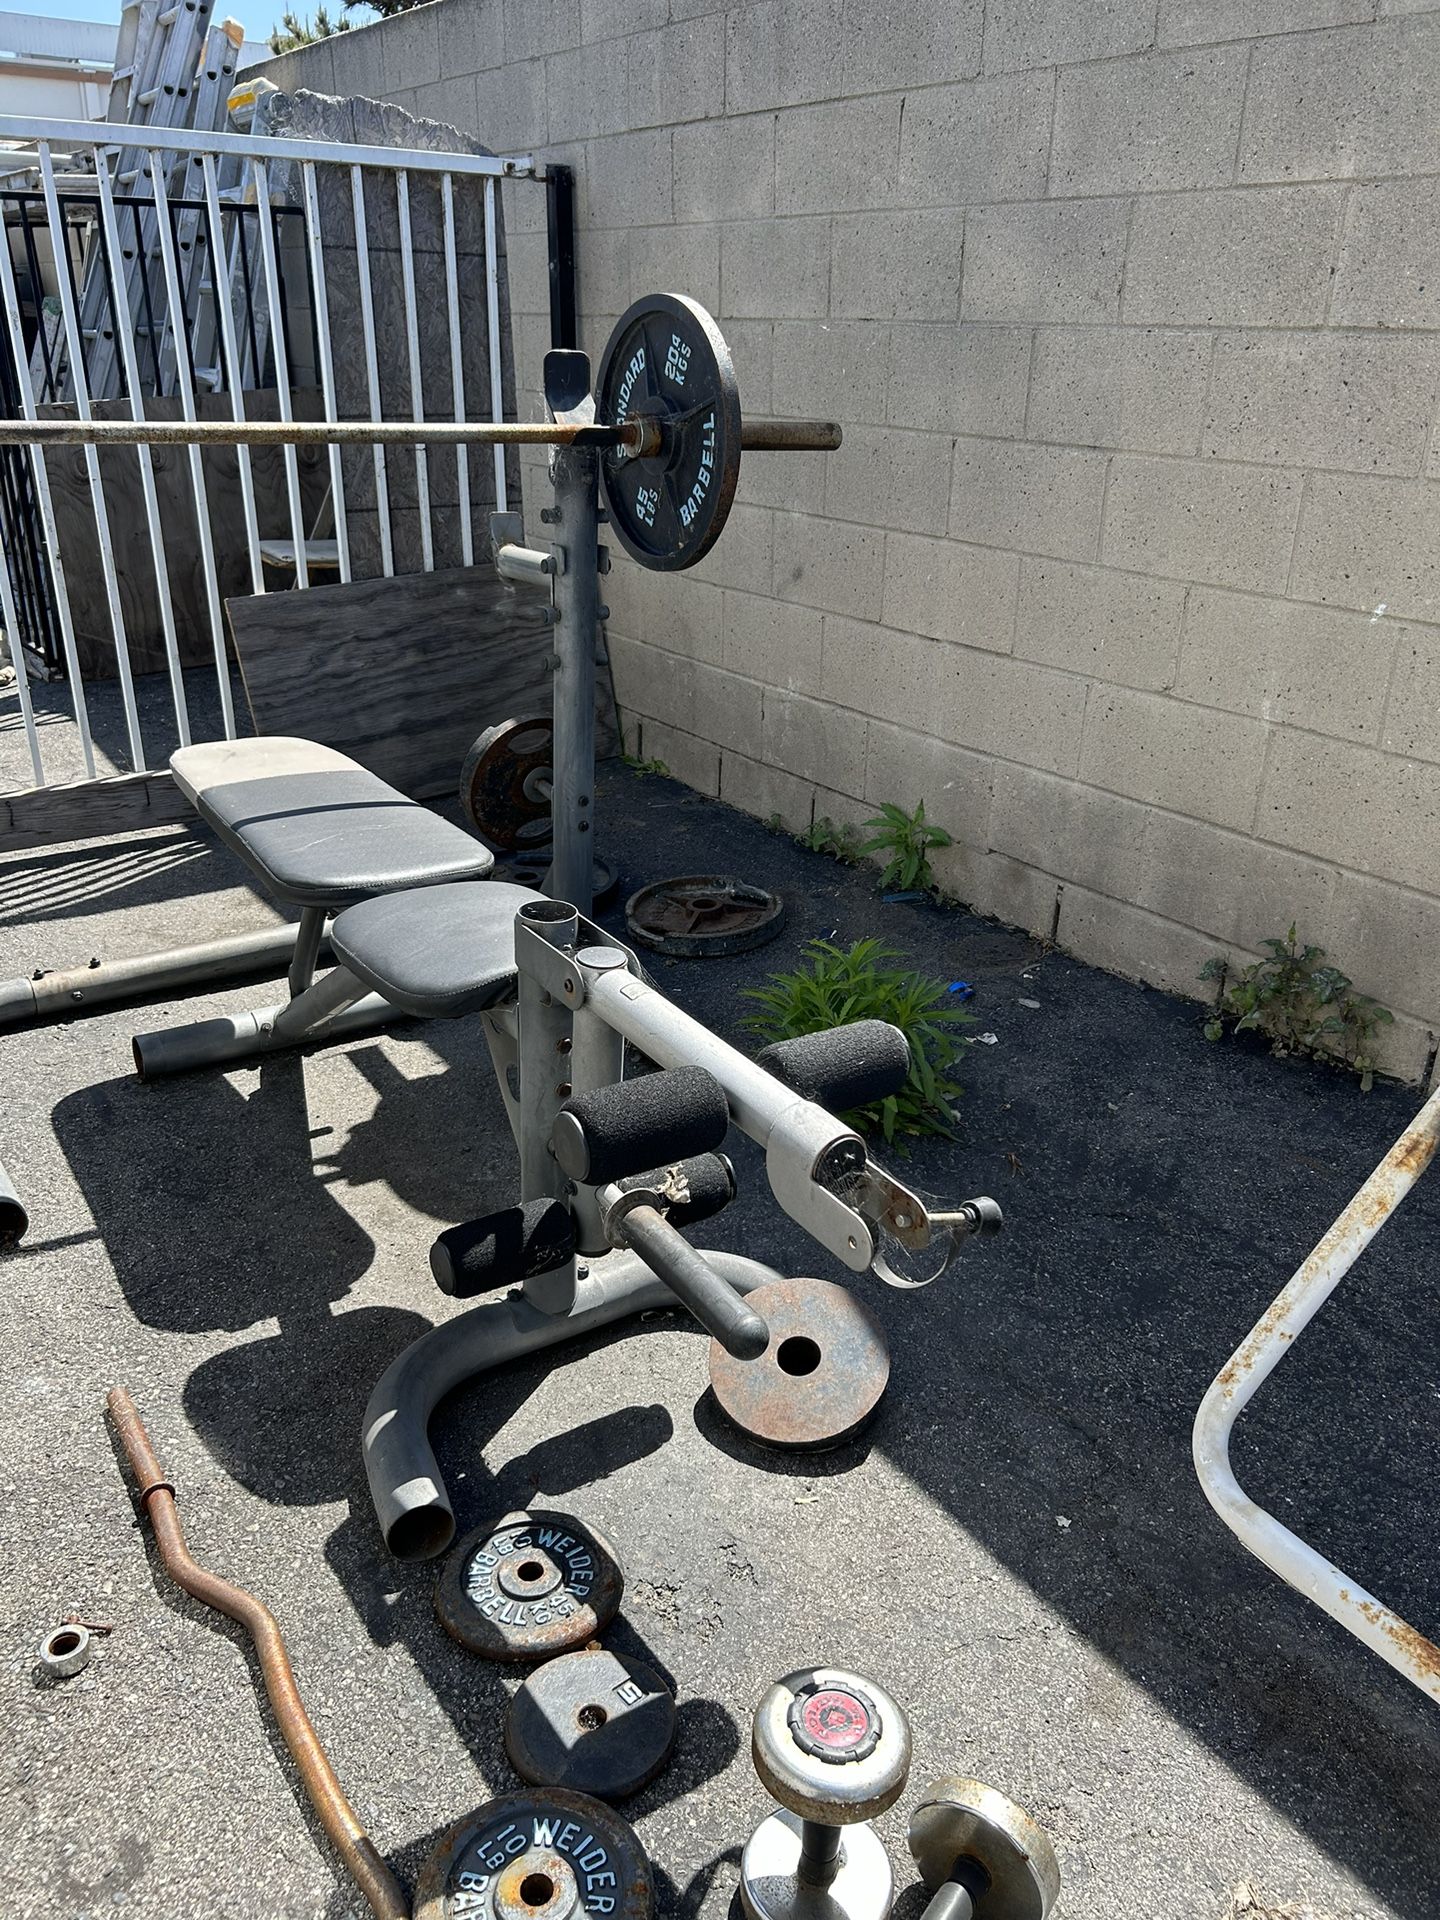 Weights / Adjustable Bench Set Up 